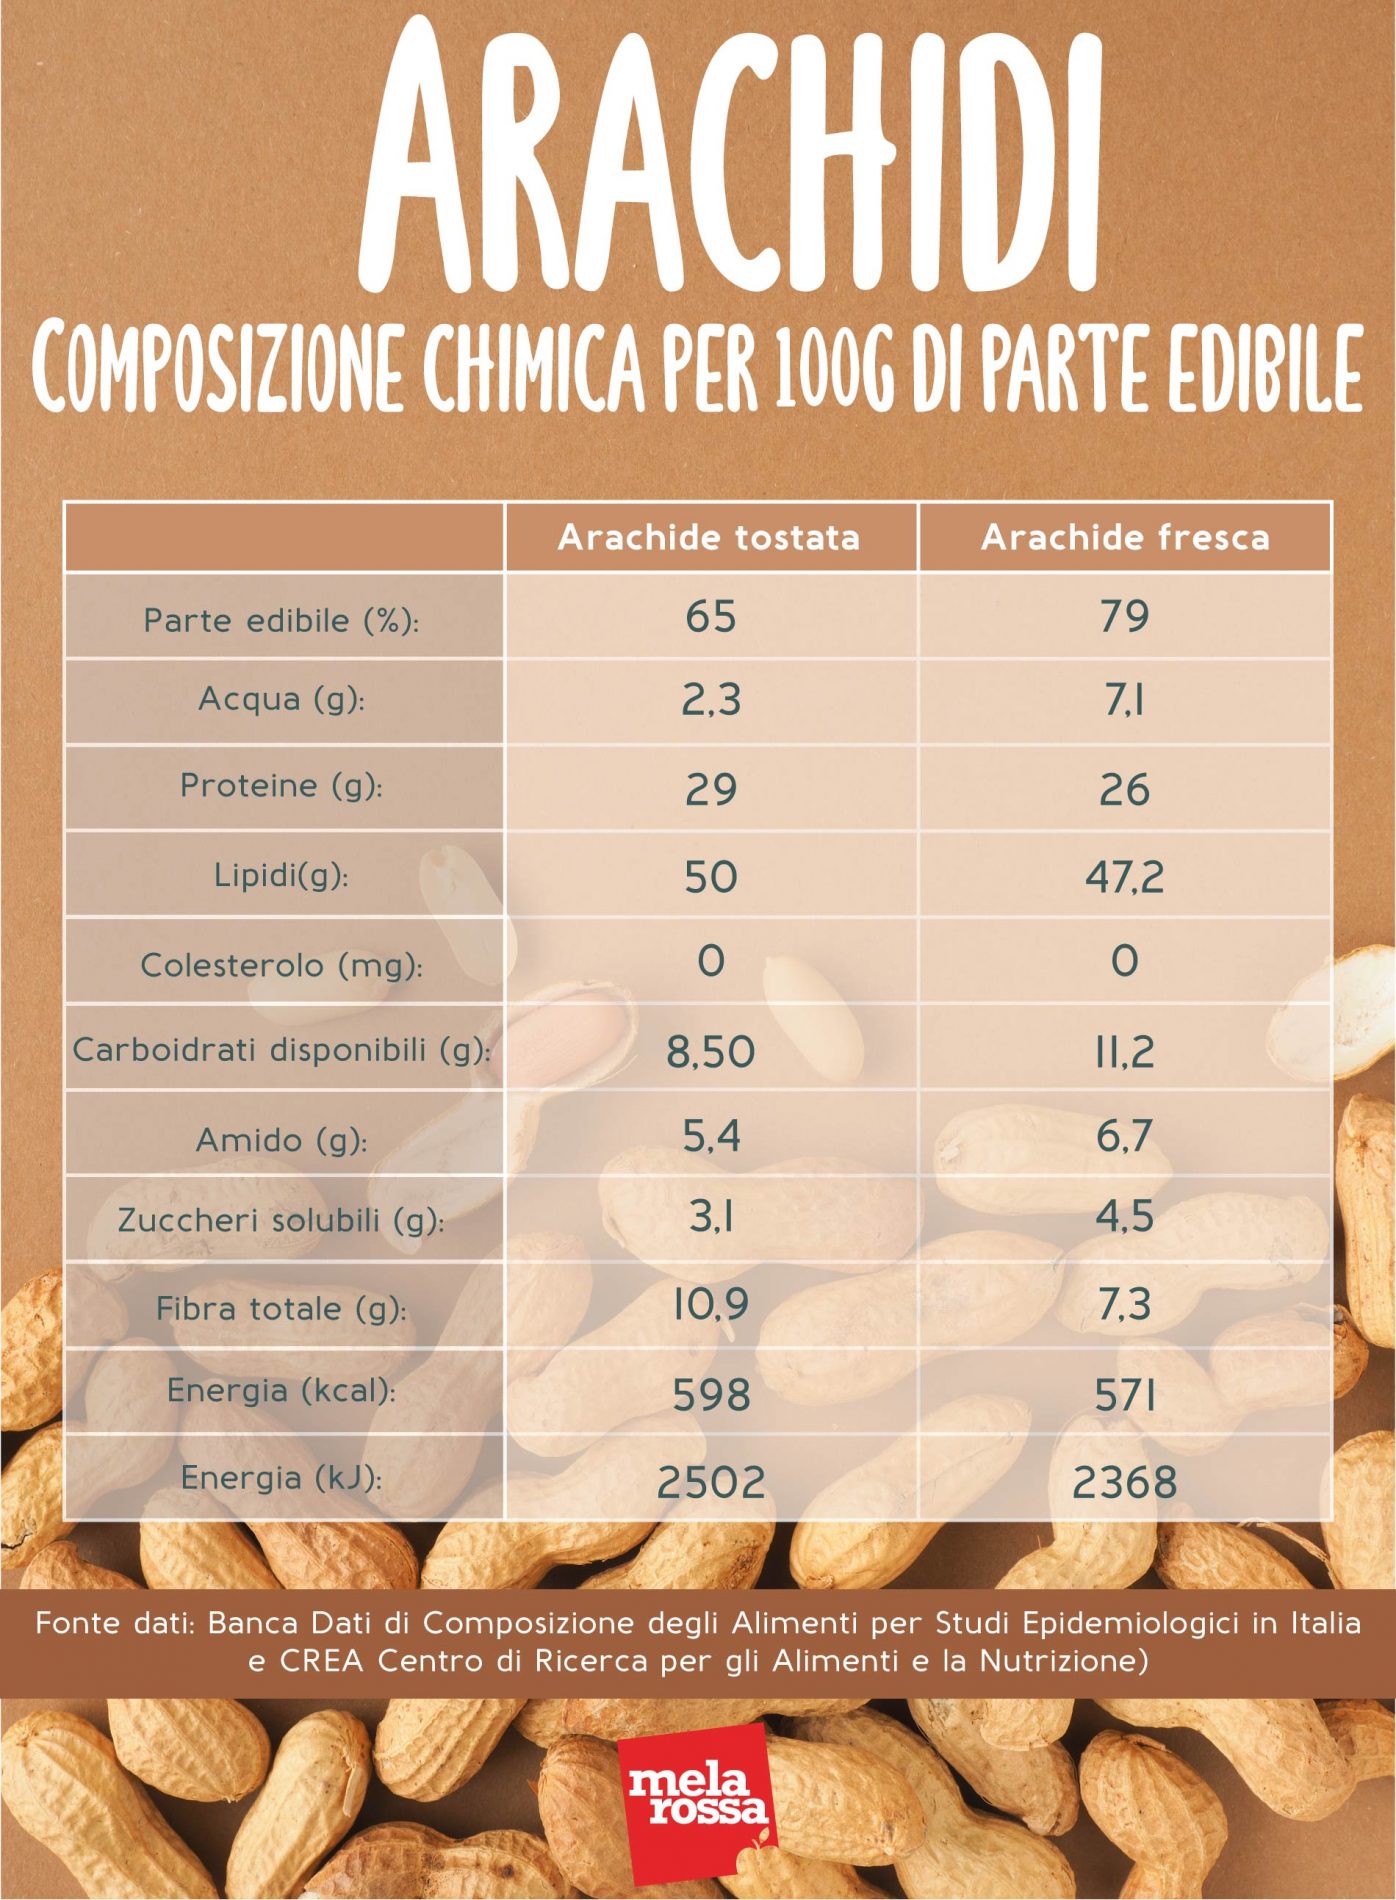 arachidi freschi e tostati: composizione chimica